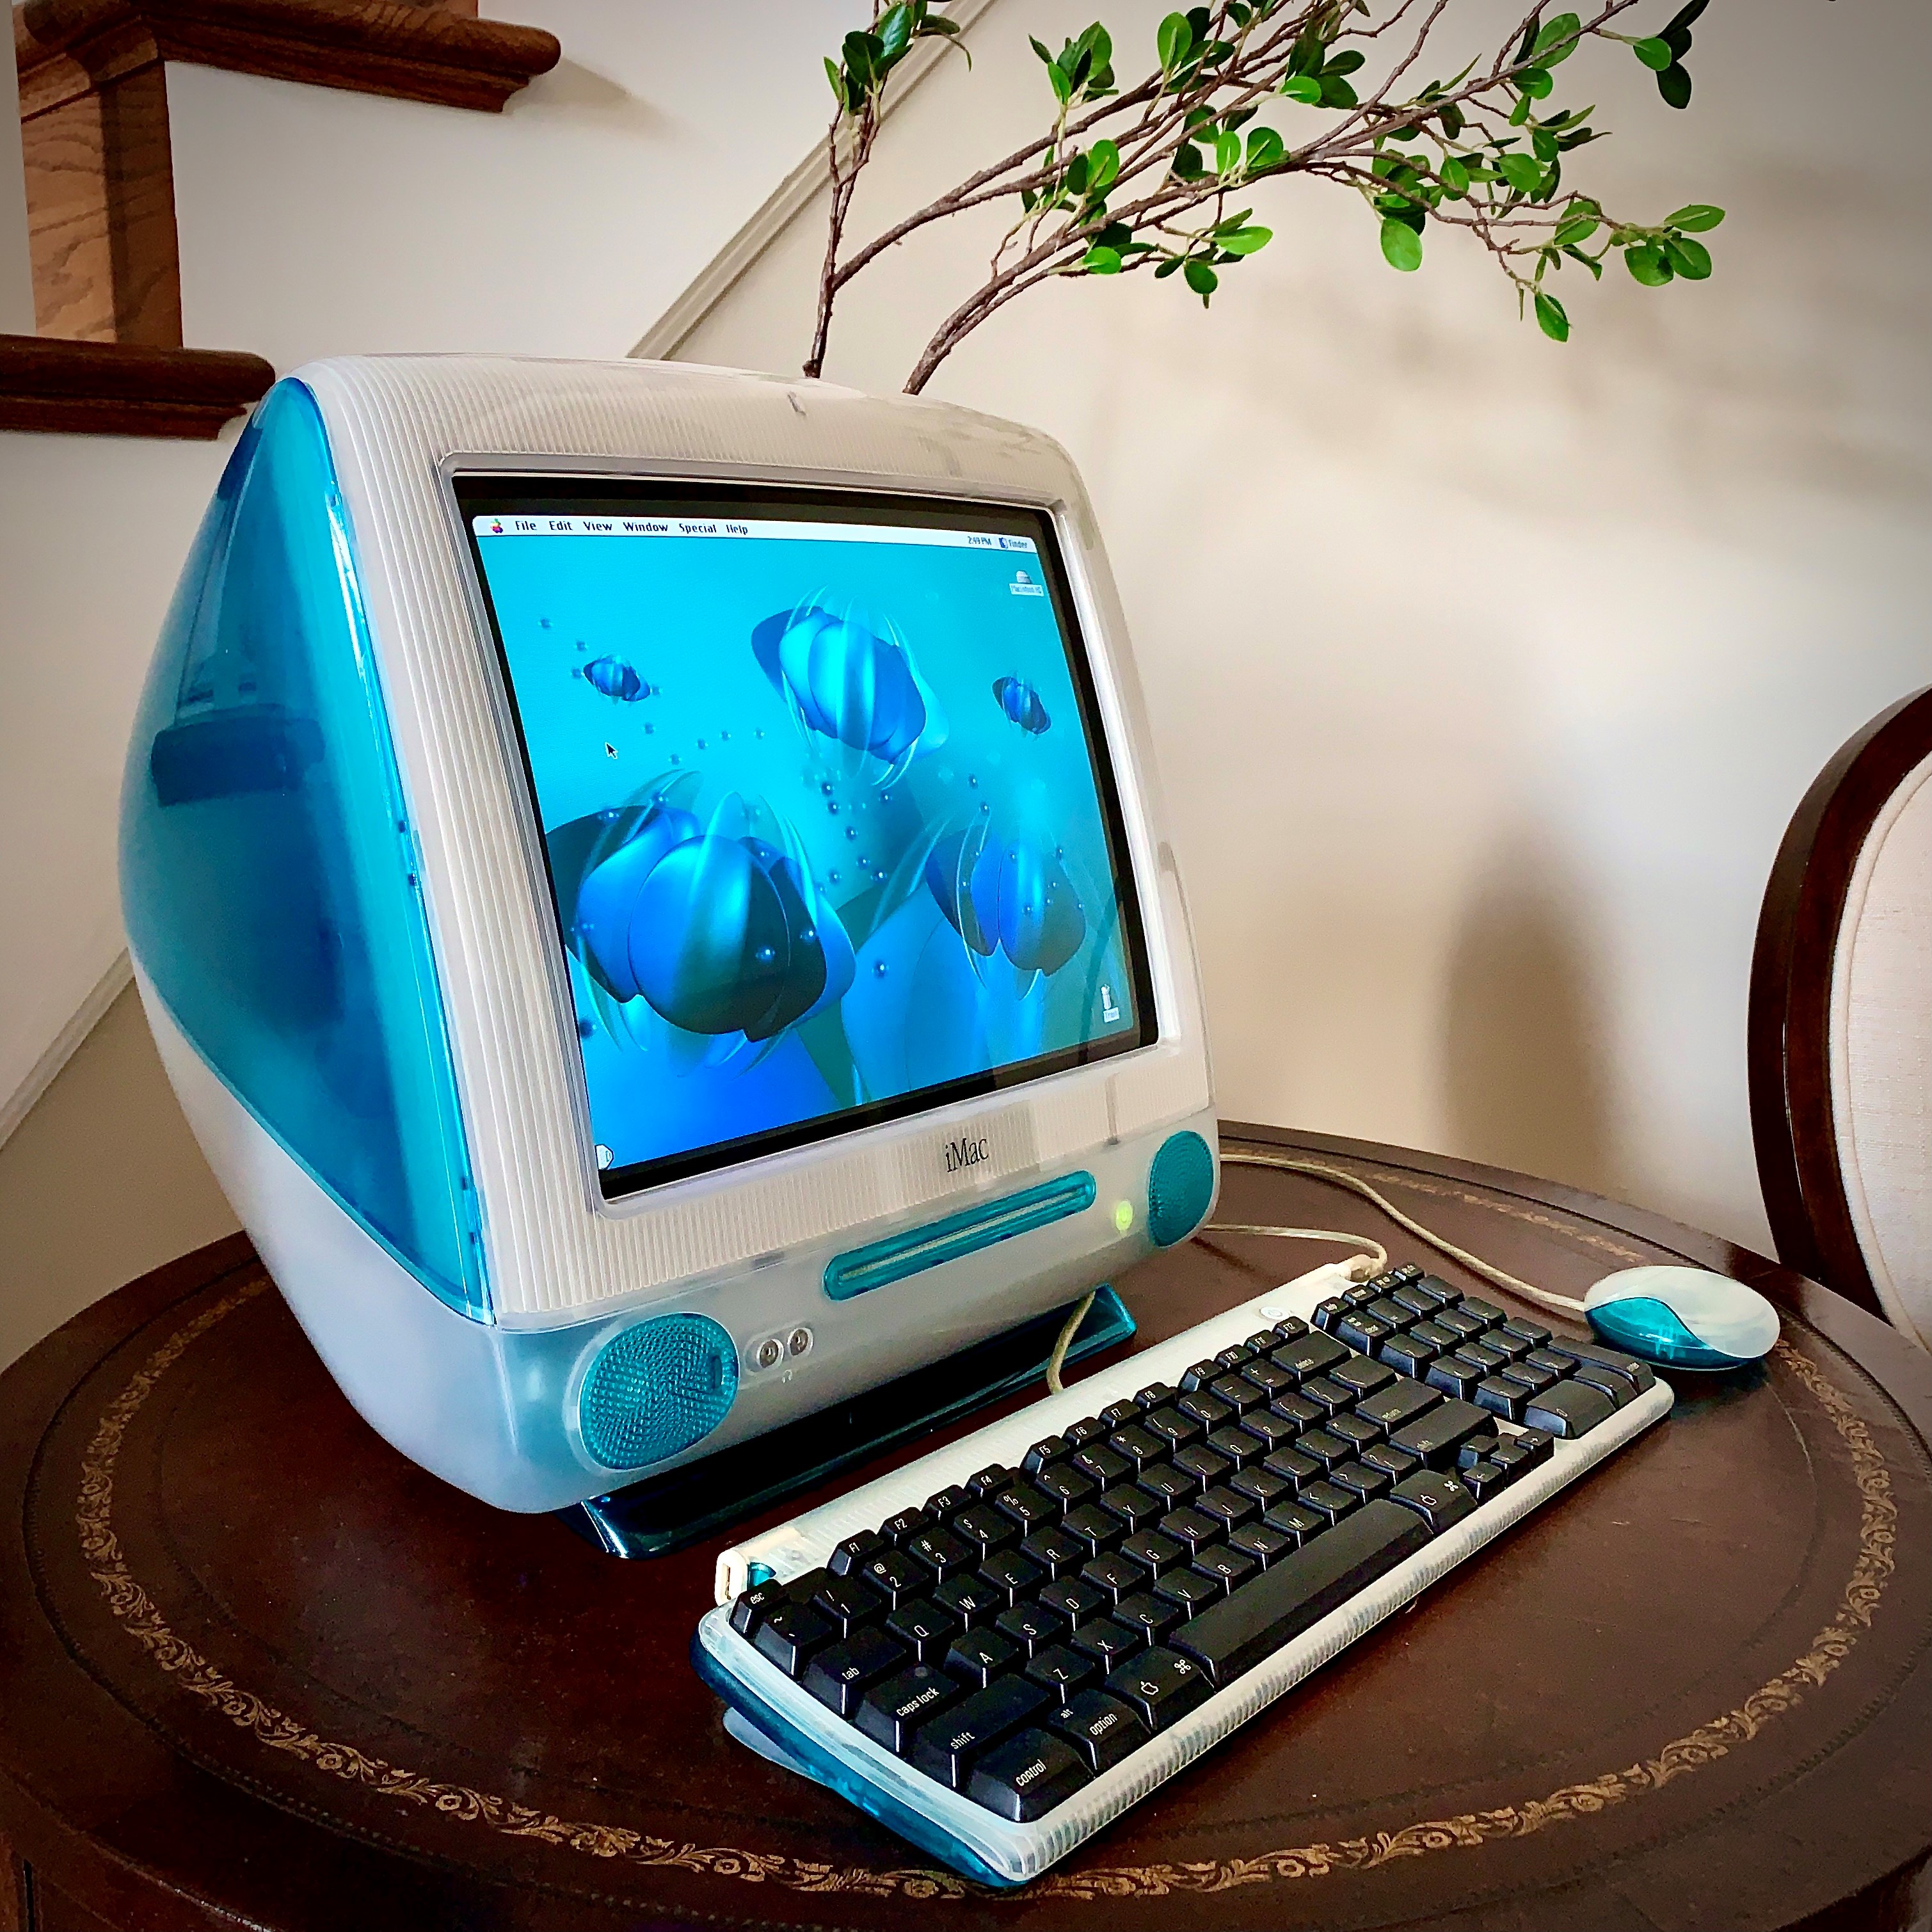 Máy tính iMac G3